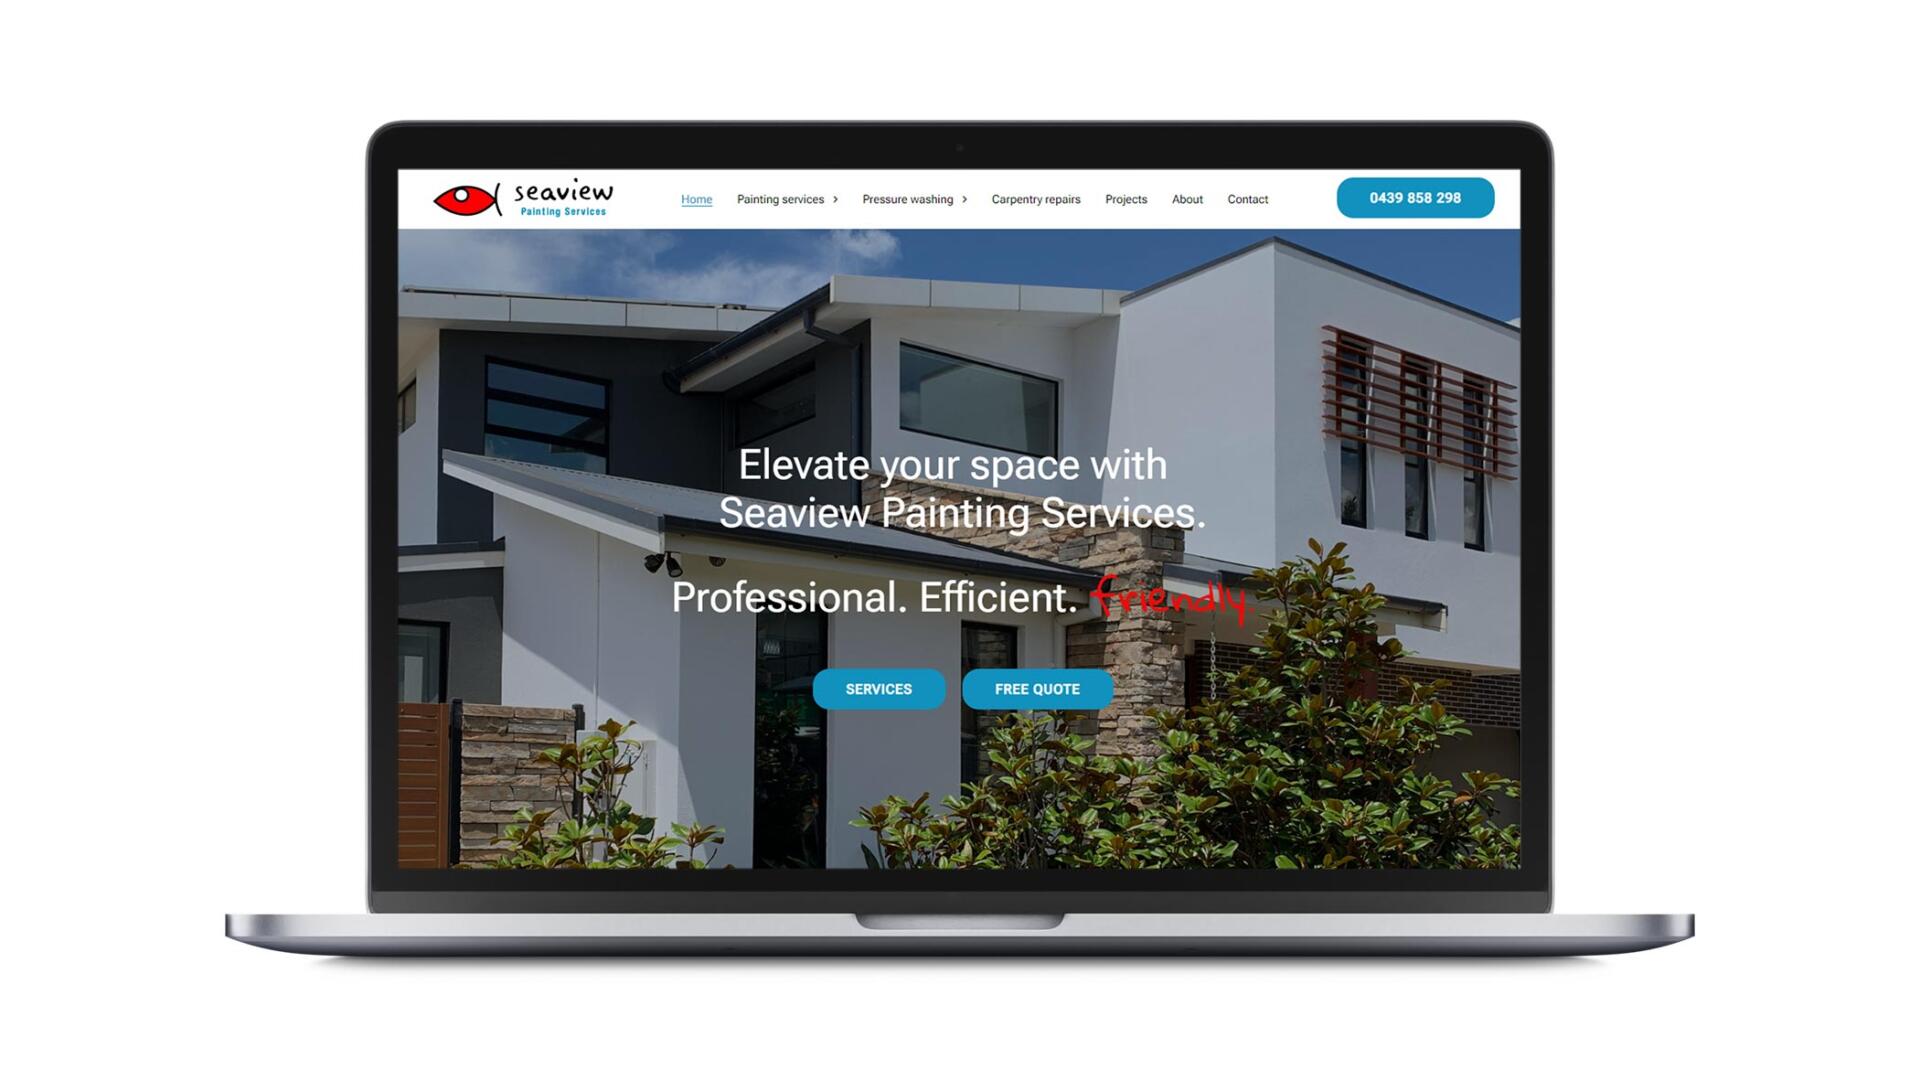 Open laptop showing responsive SEO website designed by Geelong website developers